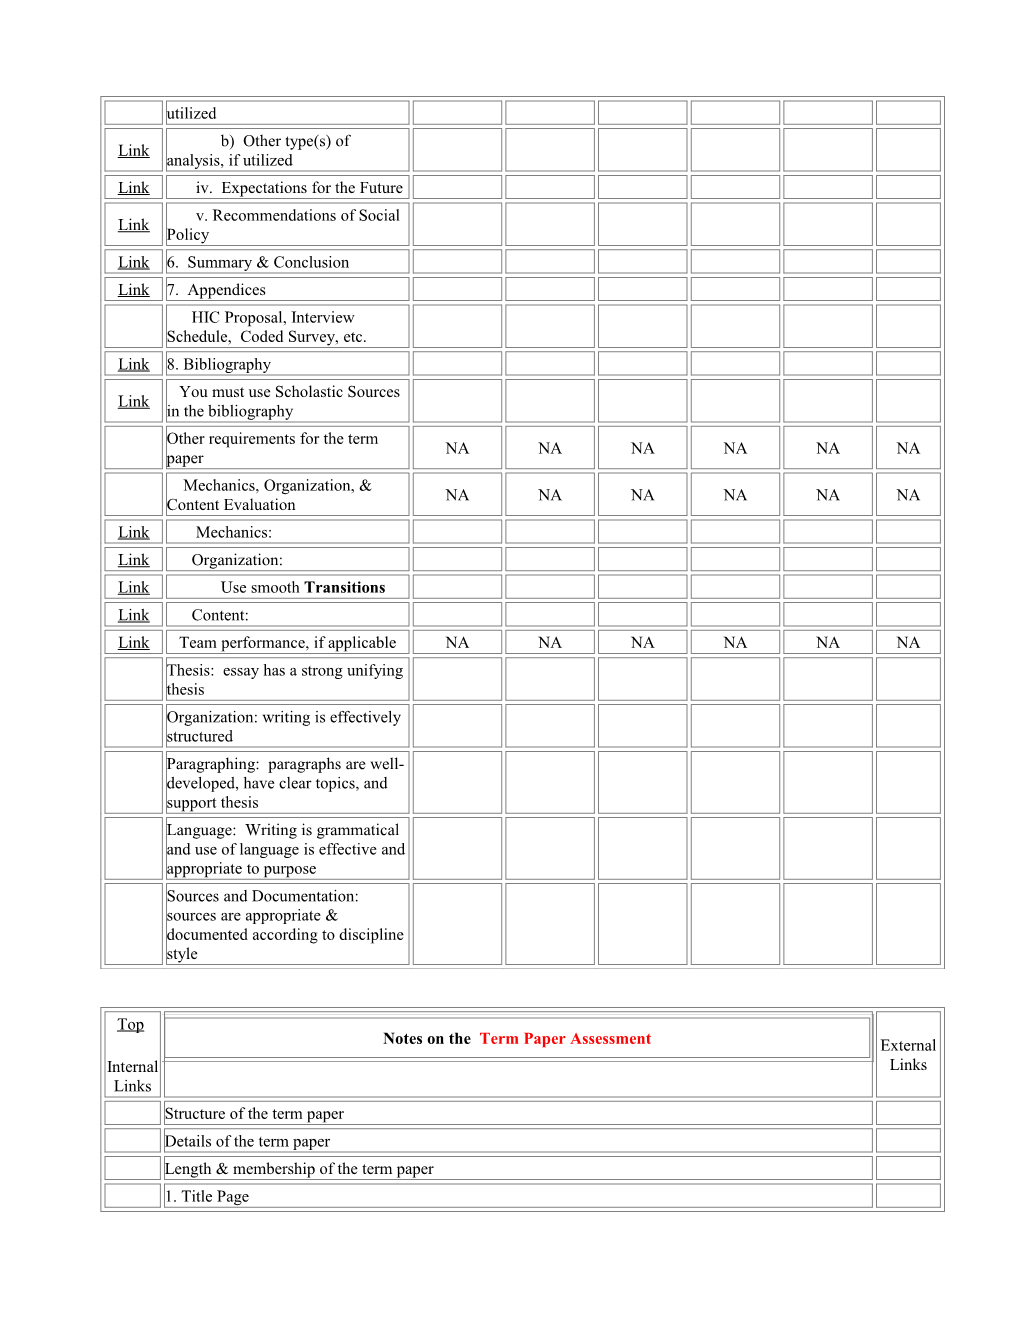 20. Term Paper Assessment Form